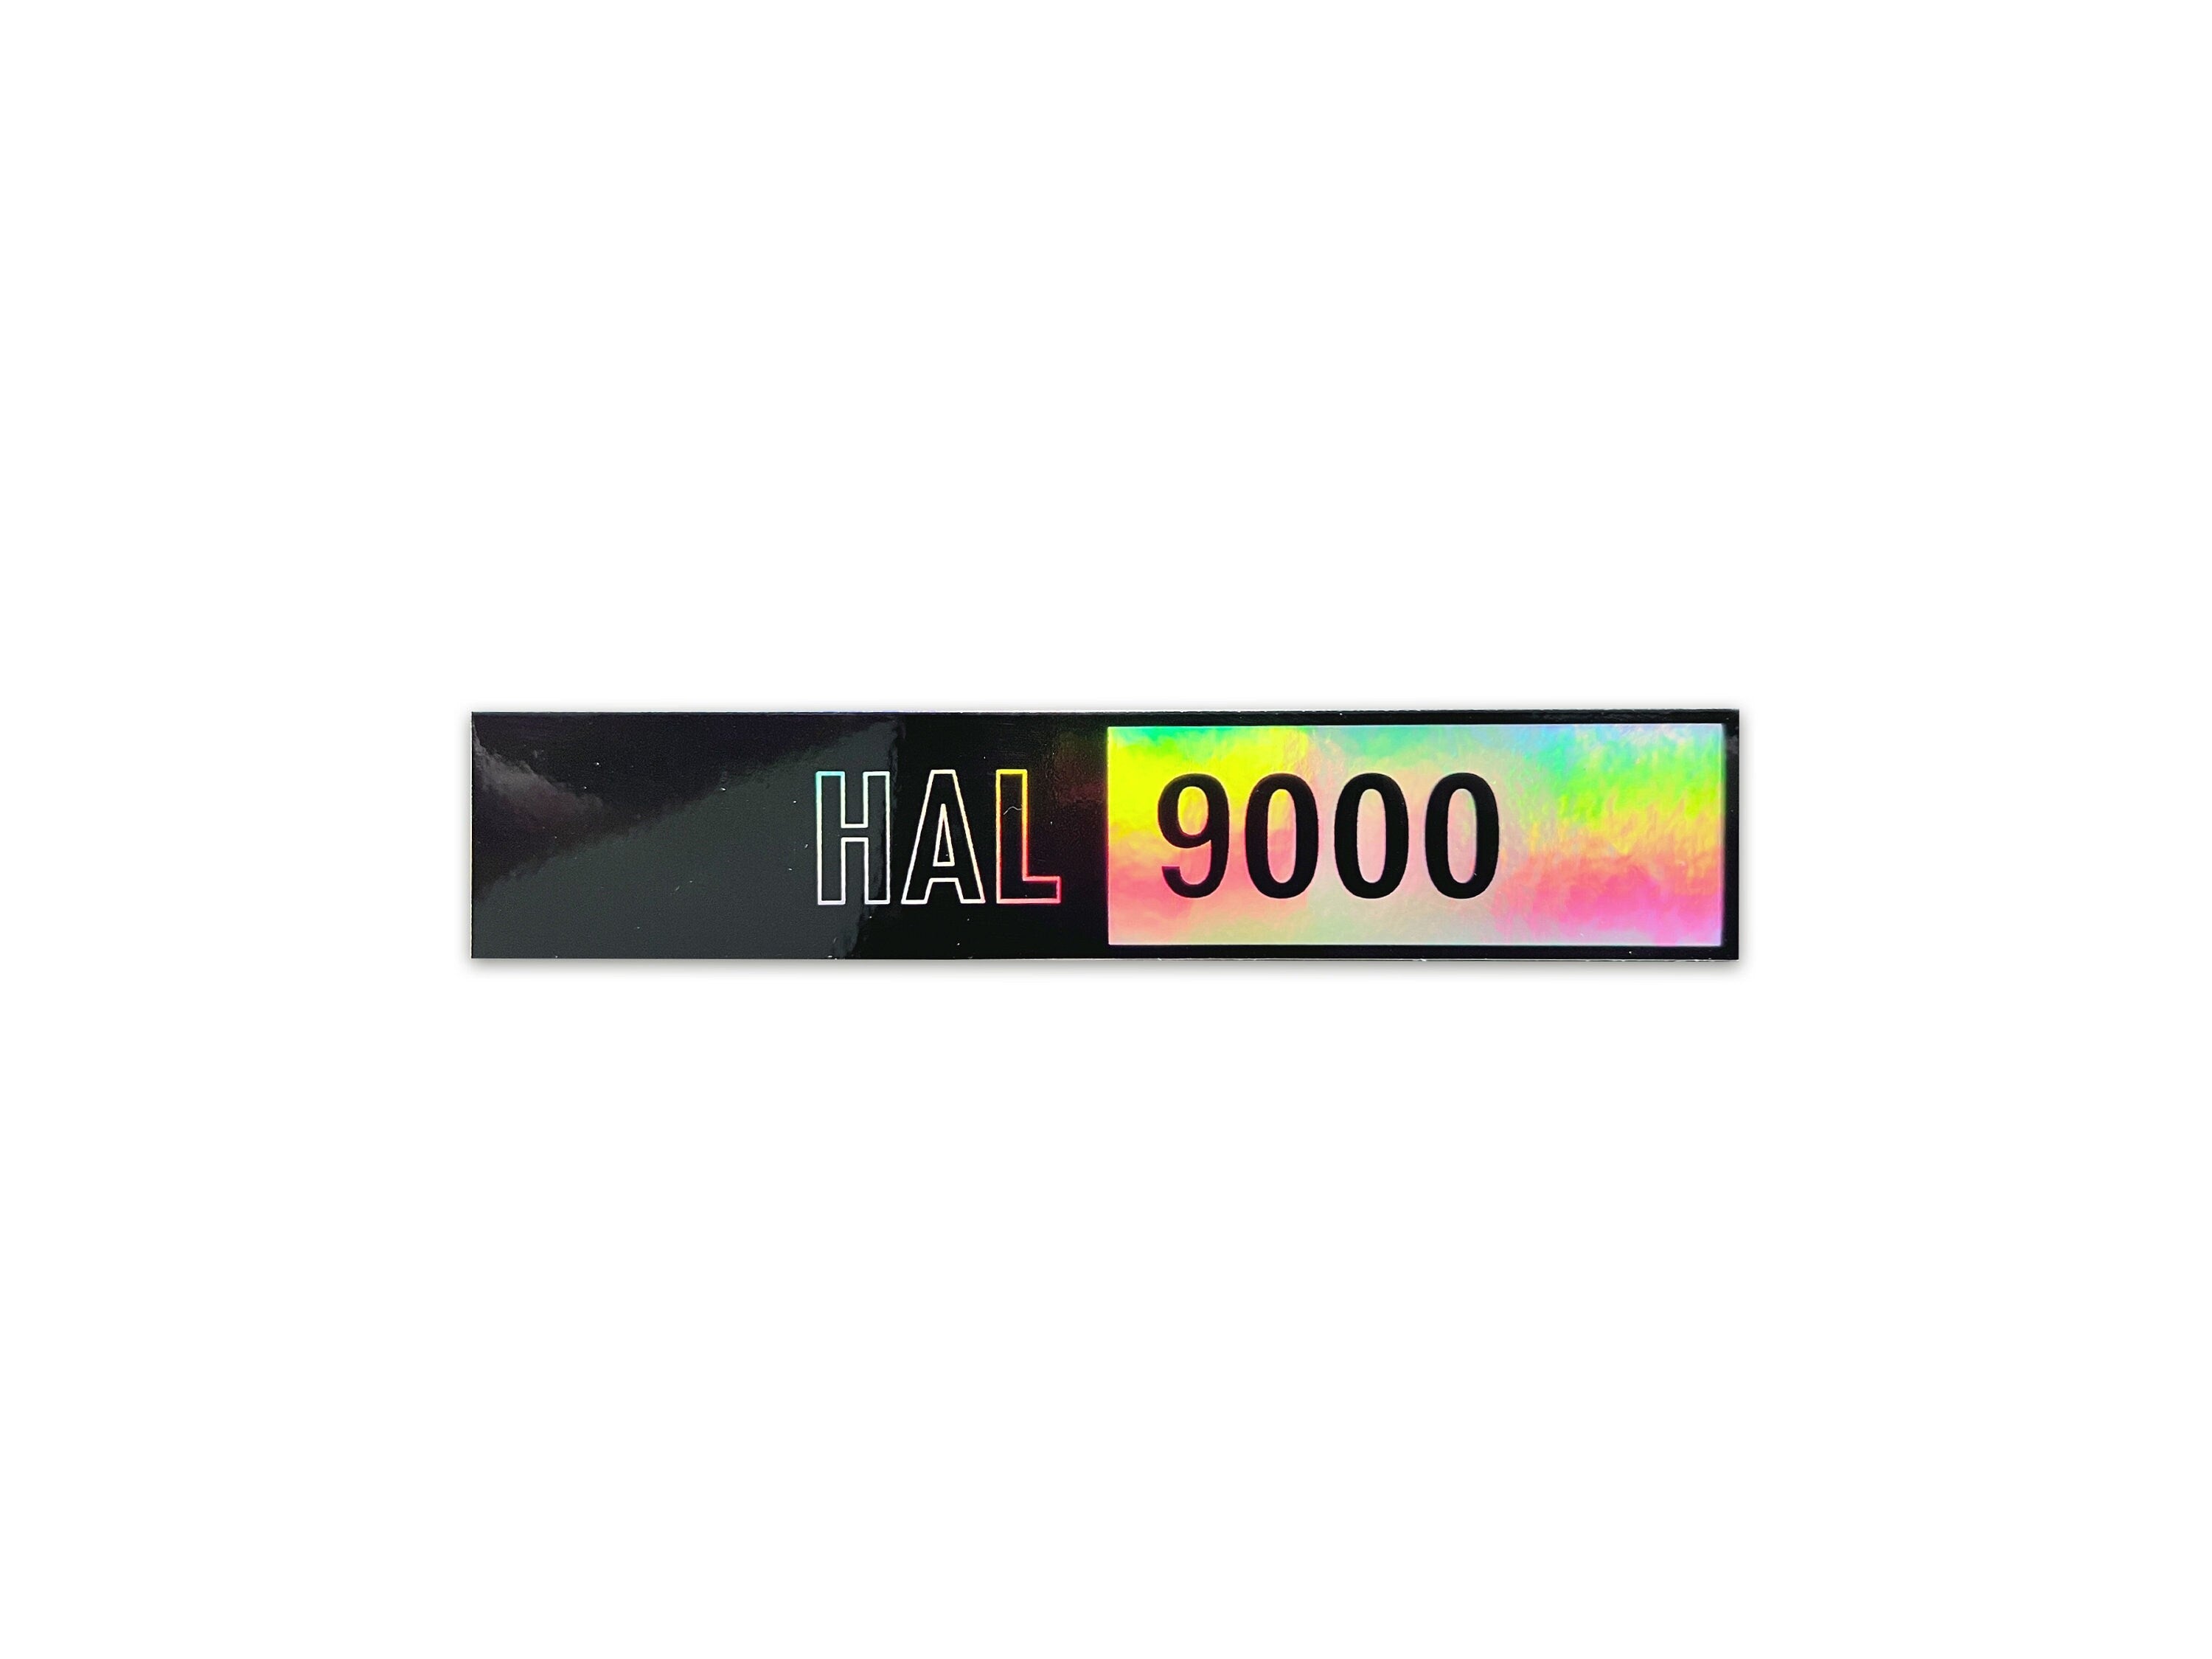 HAL 9000 Holographic Decal - Retrofuturistic 2001: A Space Odyssey Laptop Sticker - Sci-Fi / Cyberpunk